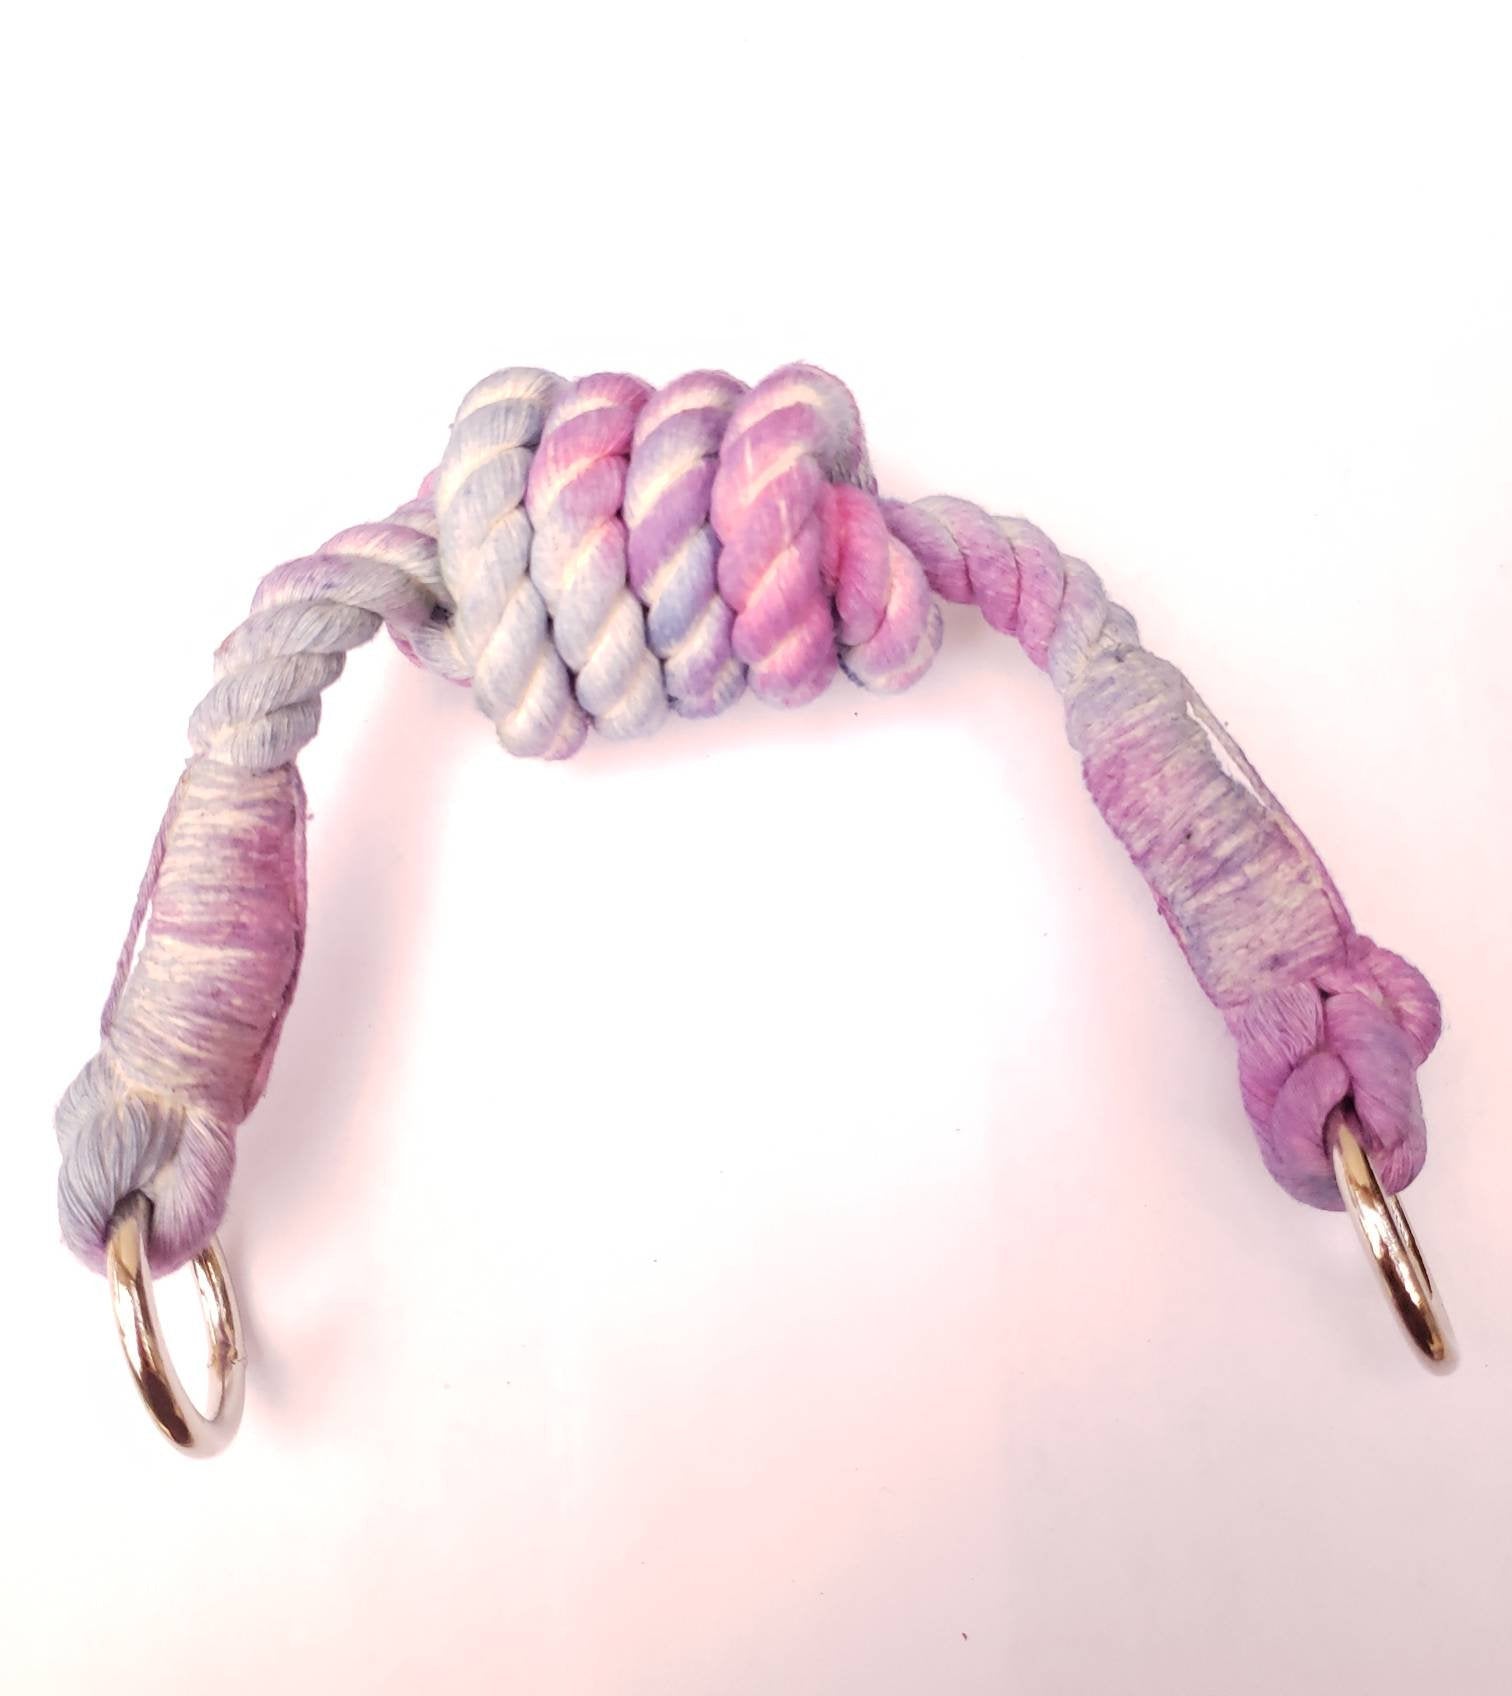 Cotton Candy Large Rope Bit Gag, 100% Cotton Rope BDSM Gag | Vixen's Hidden Desires